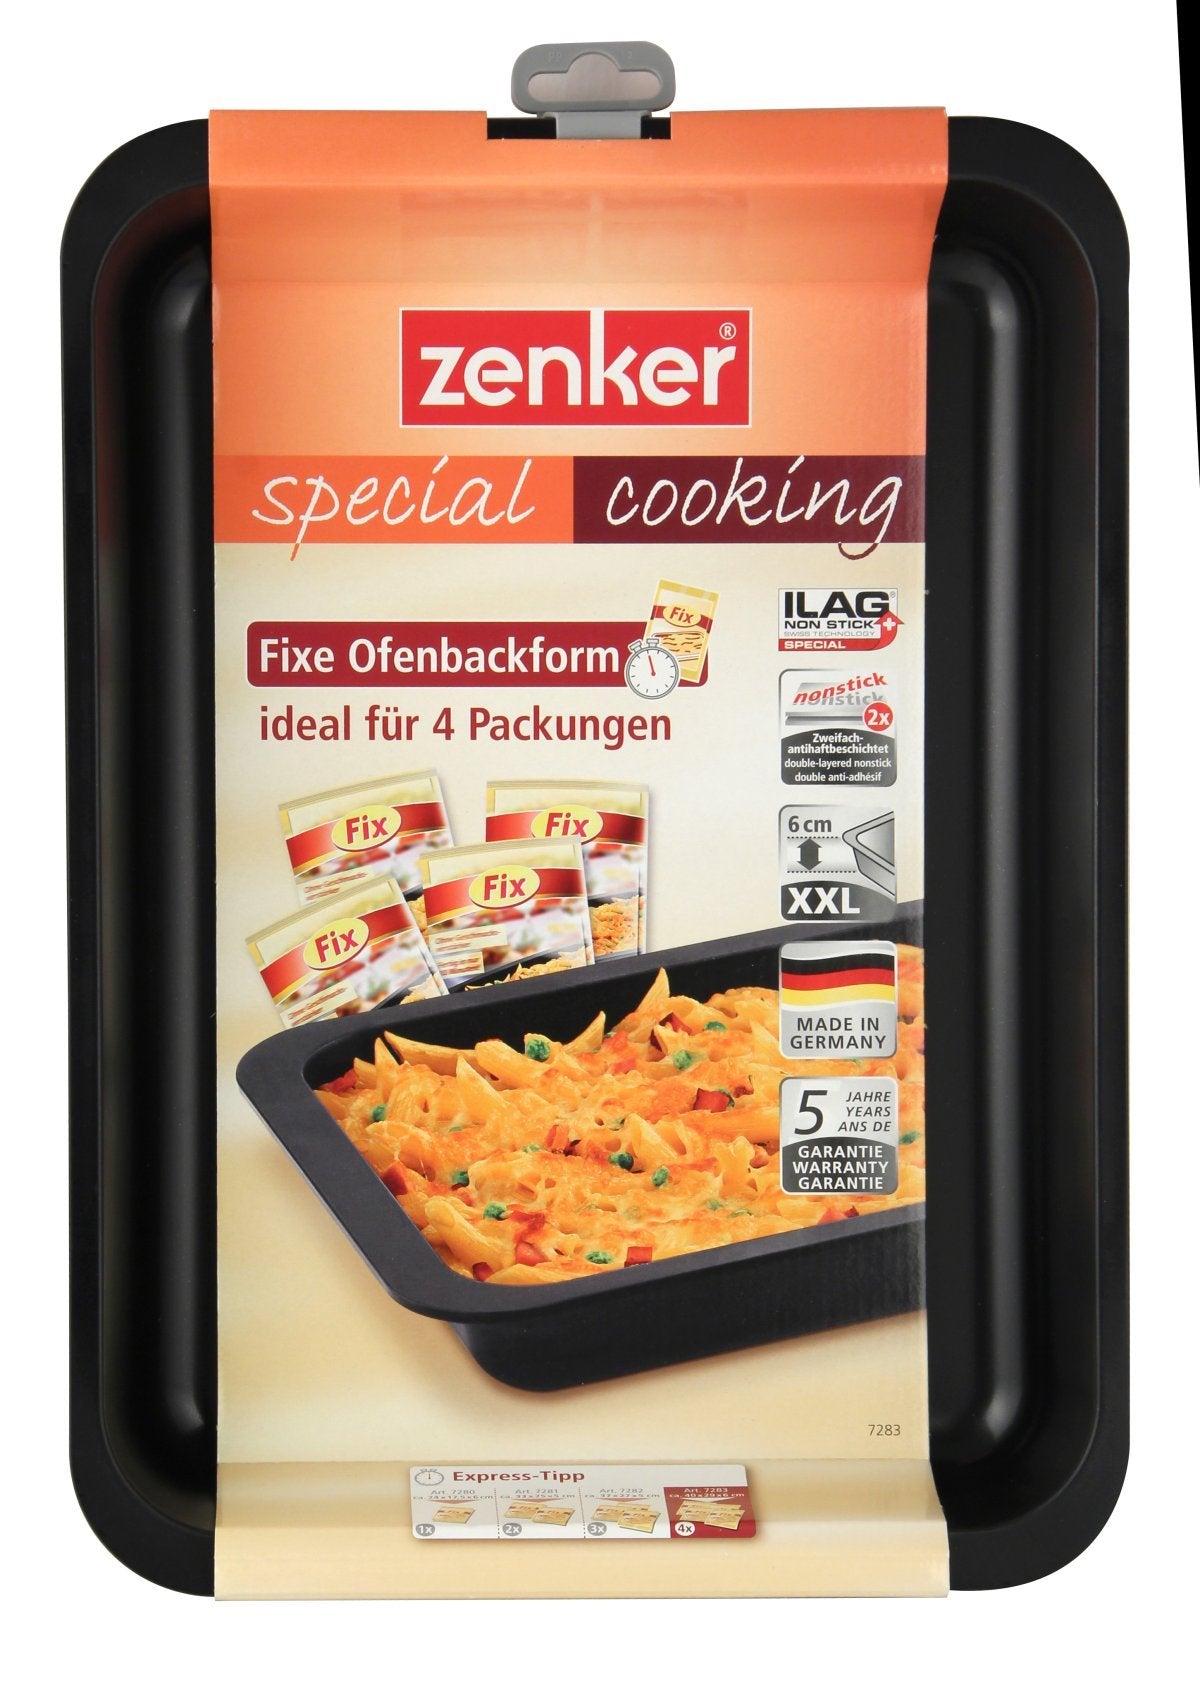 Zenker "Special - Cooking" Roasting pan, steel with anti-adhesive coating